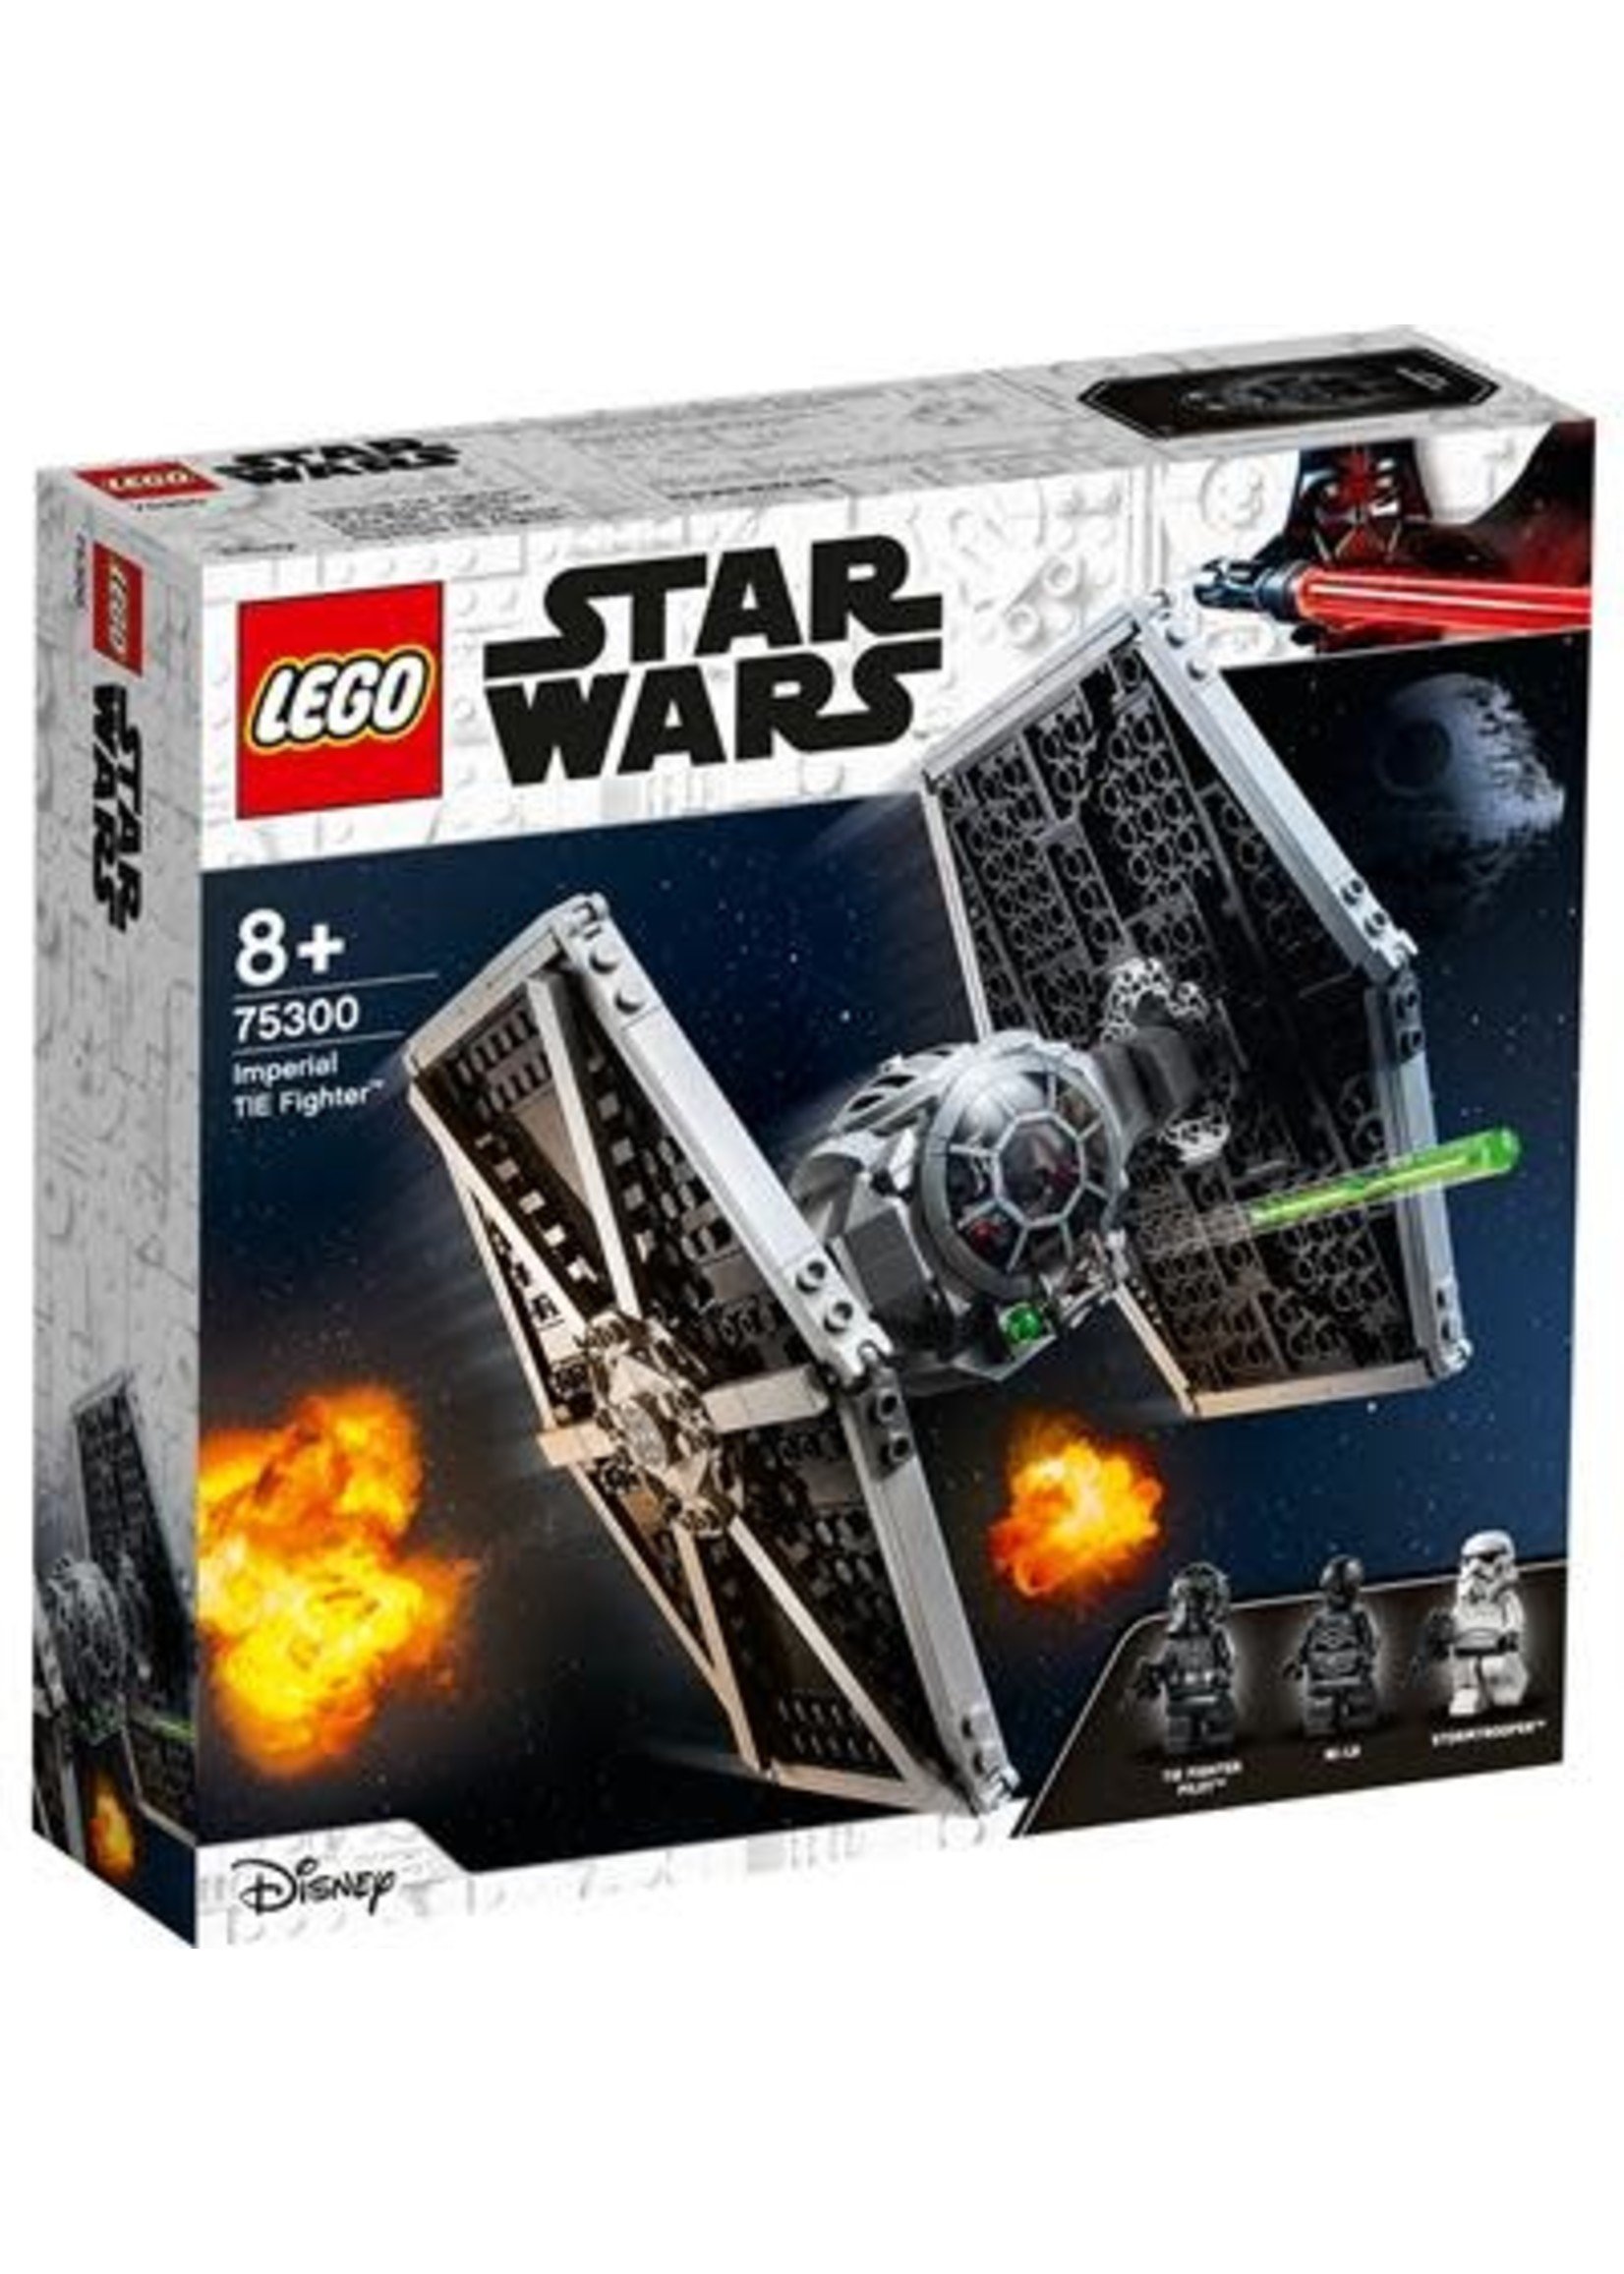 Lego LEGO STAR WARS 75300 IMPERIAL TIE FIGHTER